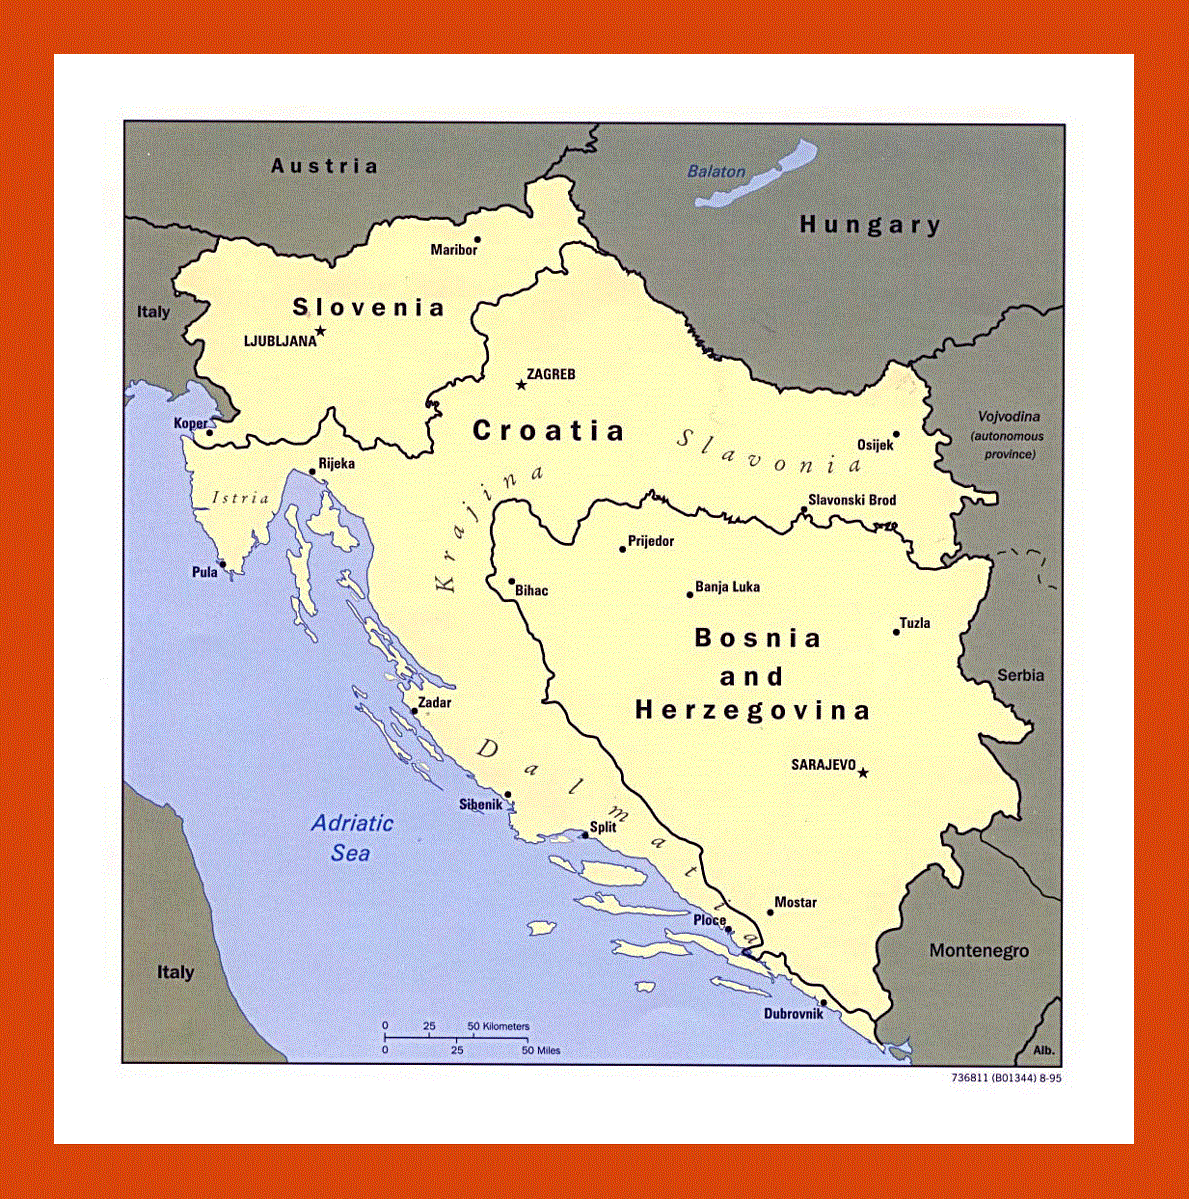 Political map of the Western Former Yugoslav Republics - 1995